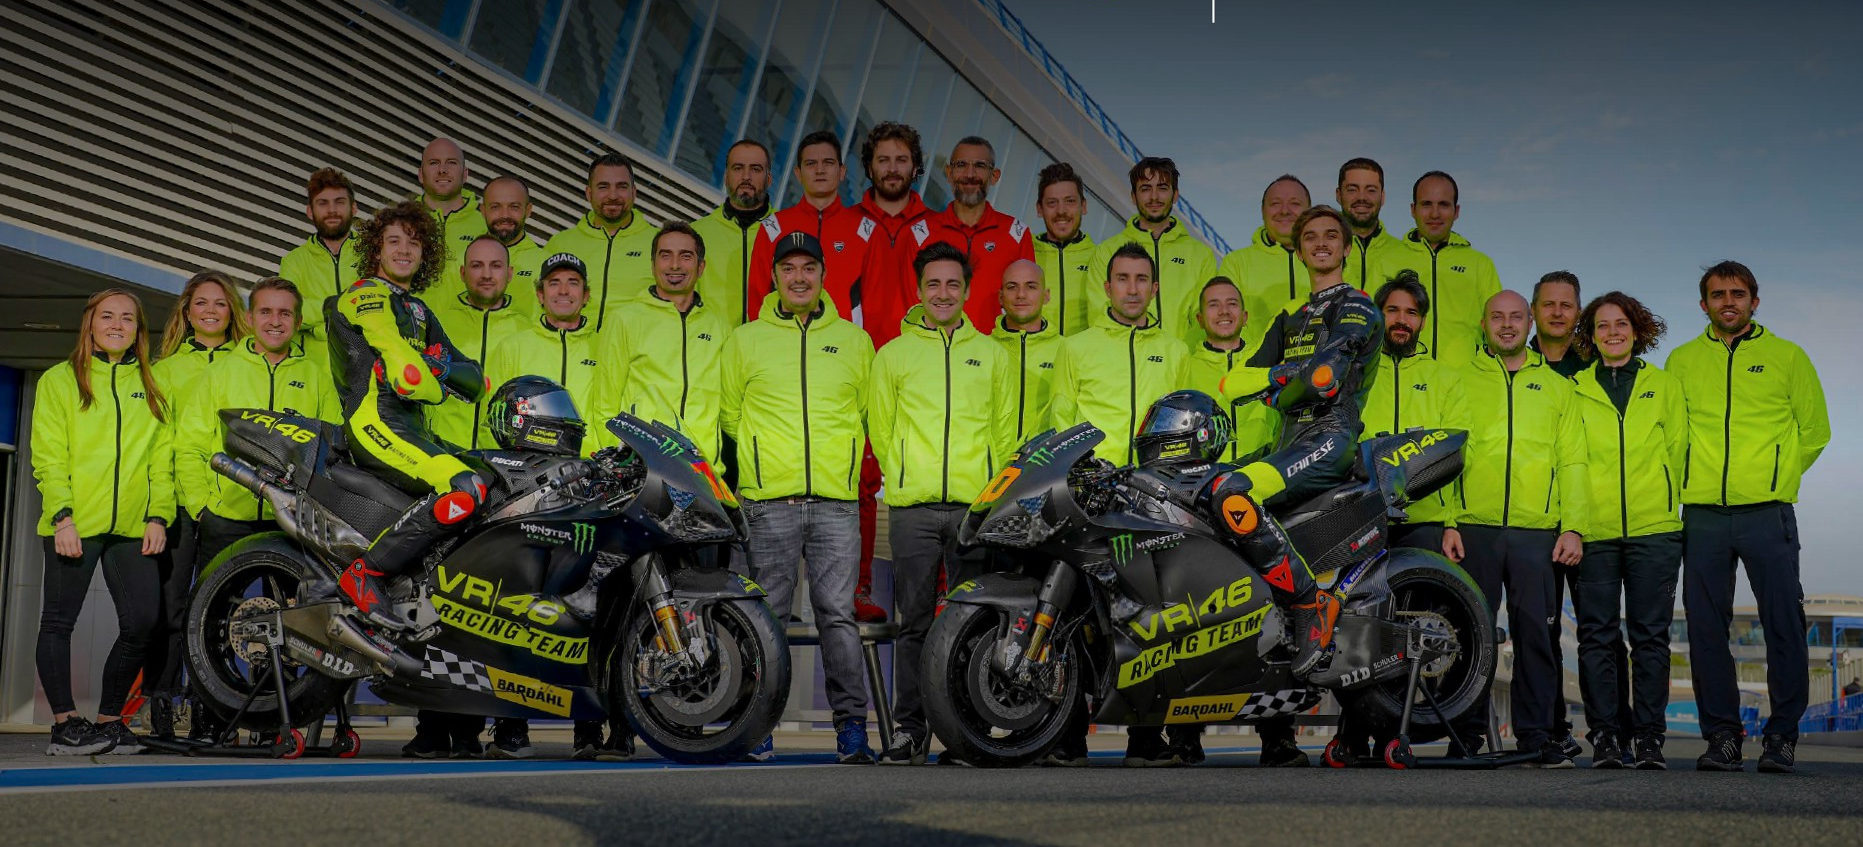 The new Mooney VR46 Racing MotoGP Team. Photo courtesy Mooney VR46 Racing Team.